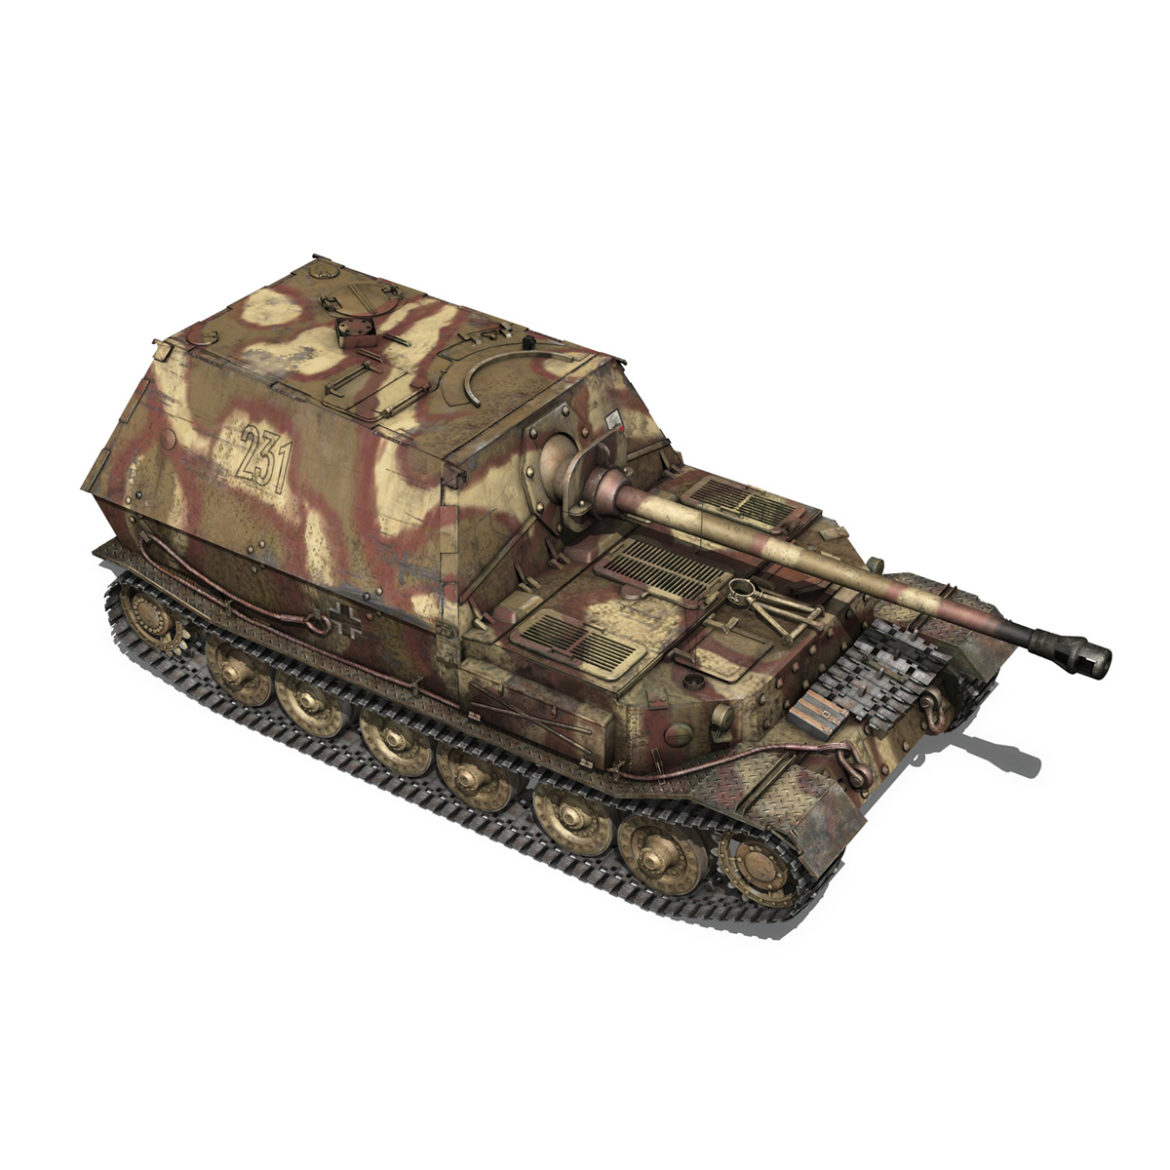 ferdinand tank destroyer – tiger (p) – 231 3d model 3ds fbx c4d lwo obj 295024